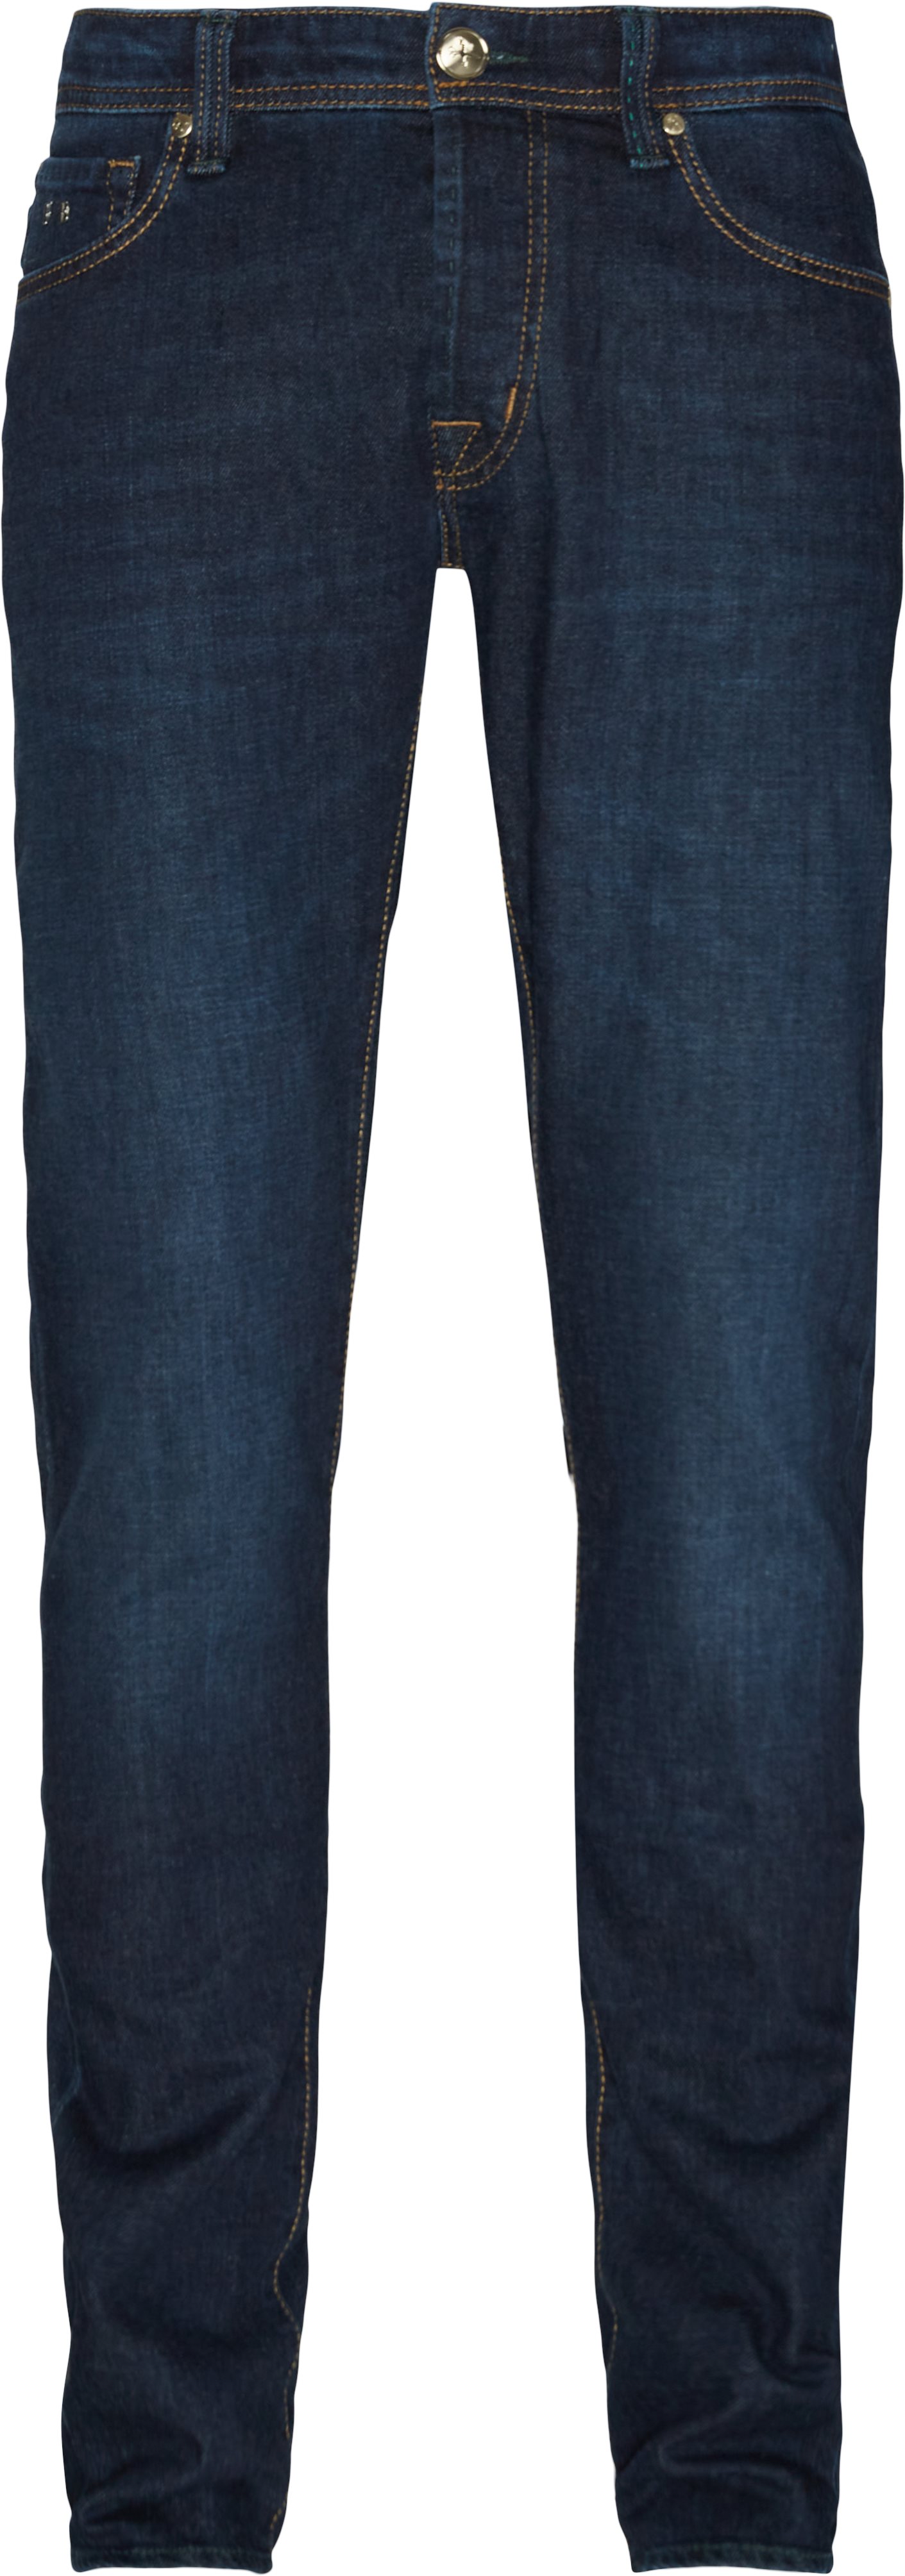 Leonardo Jeans - Jeans - Slim fit - Blue